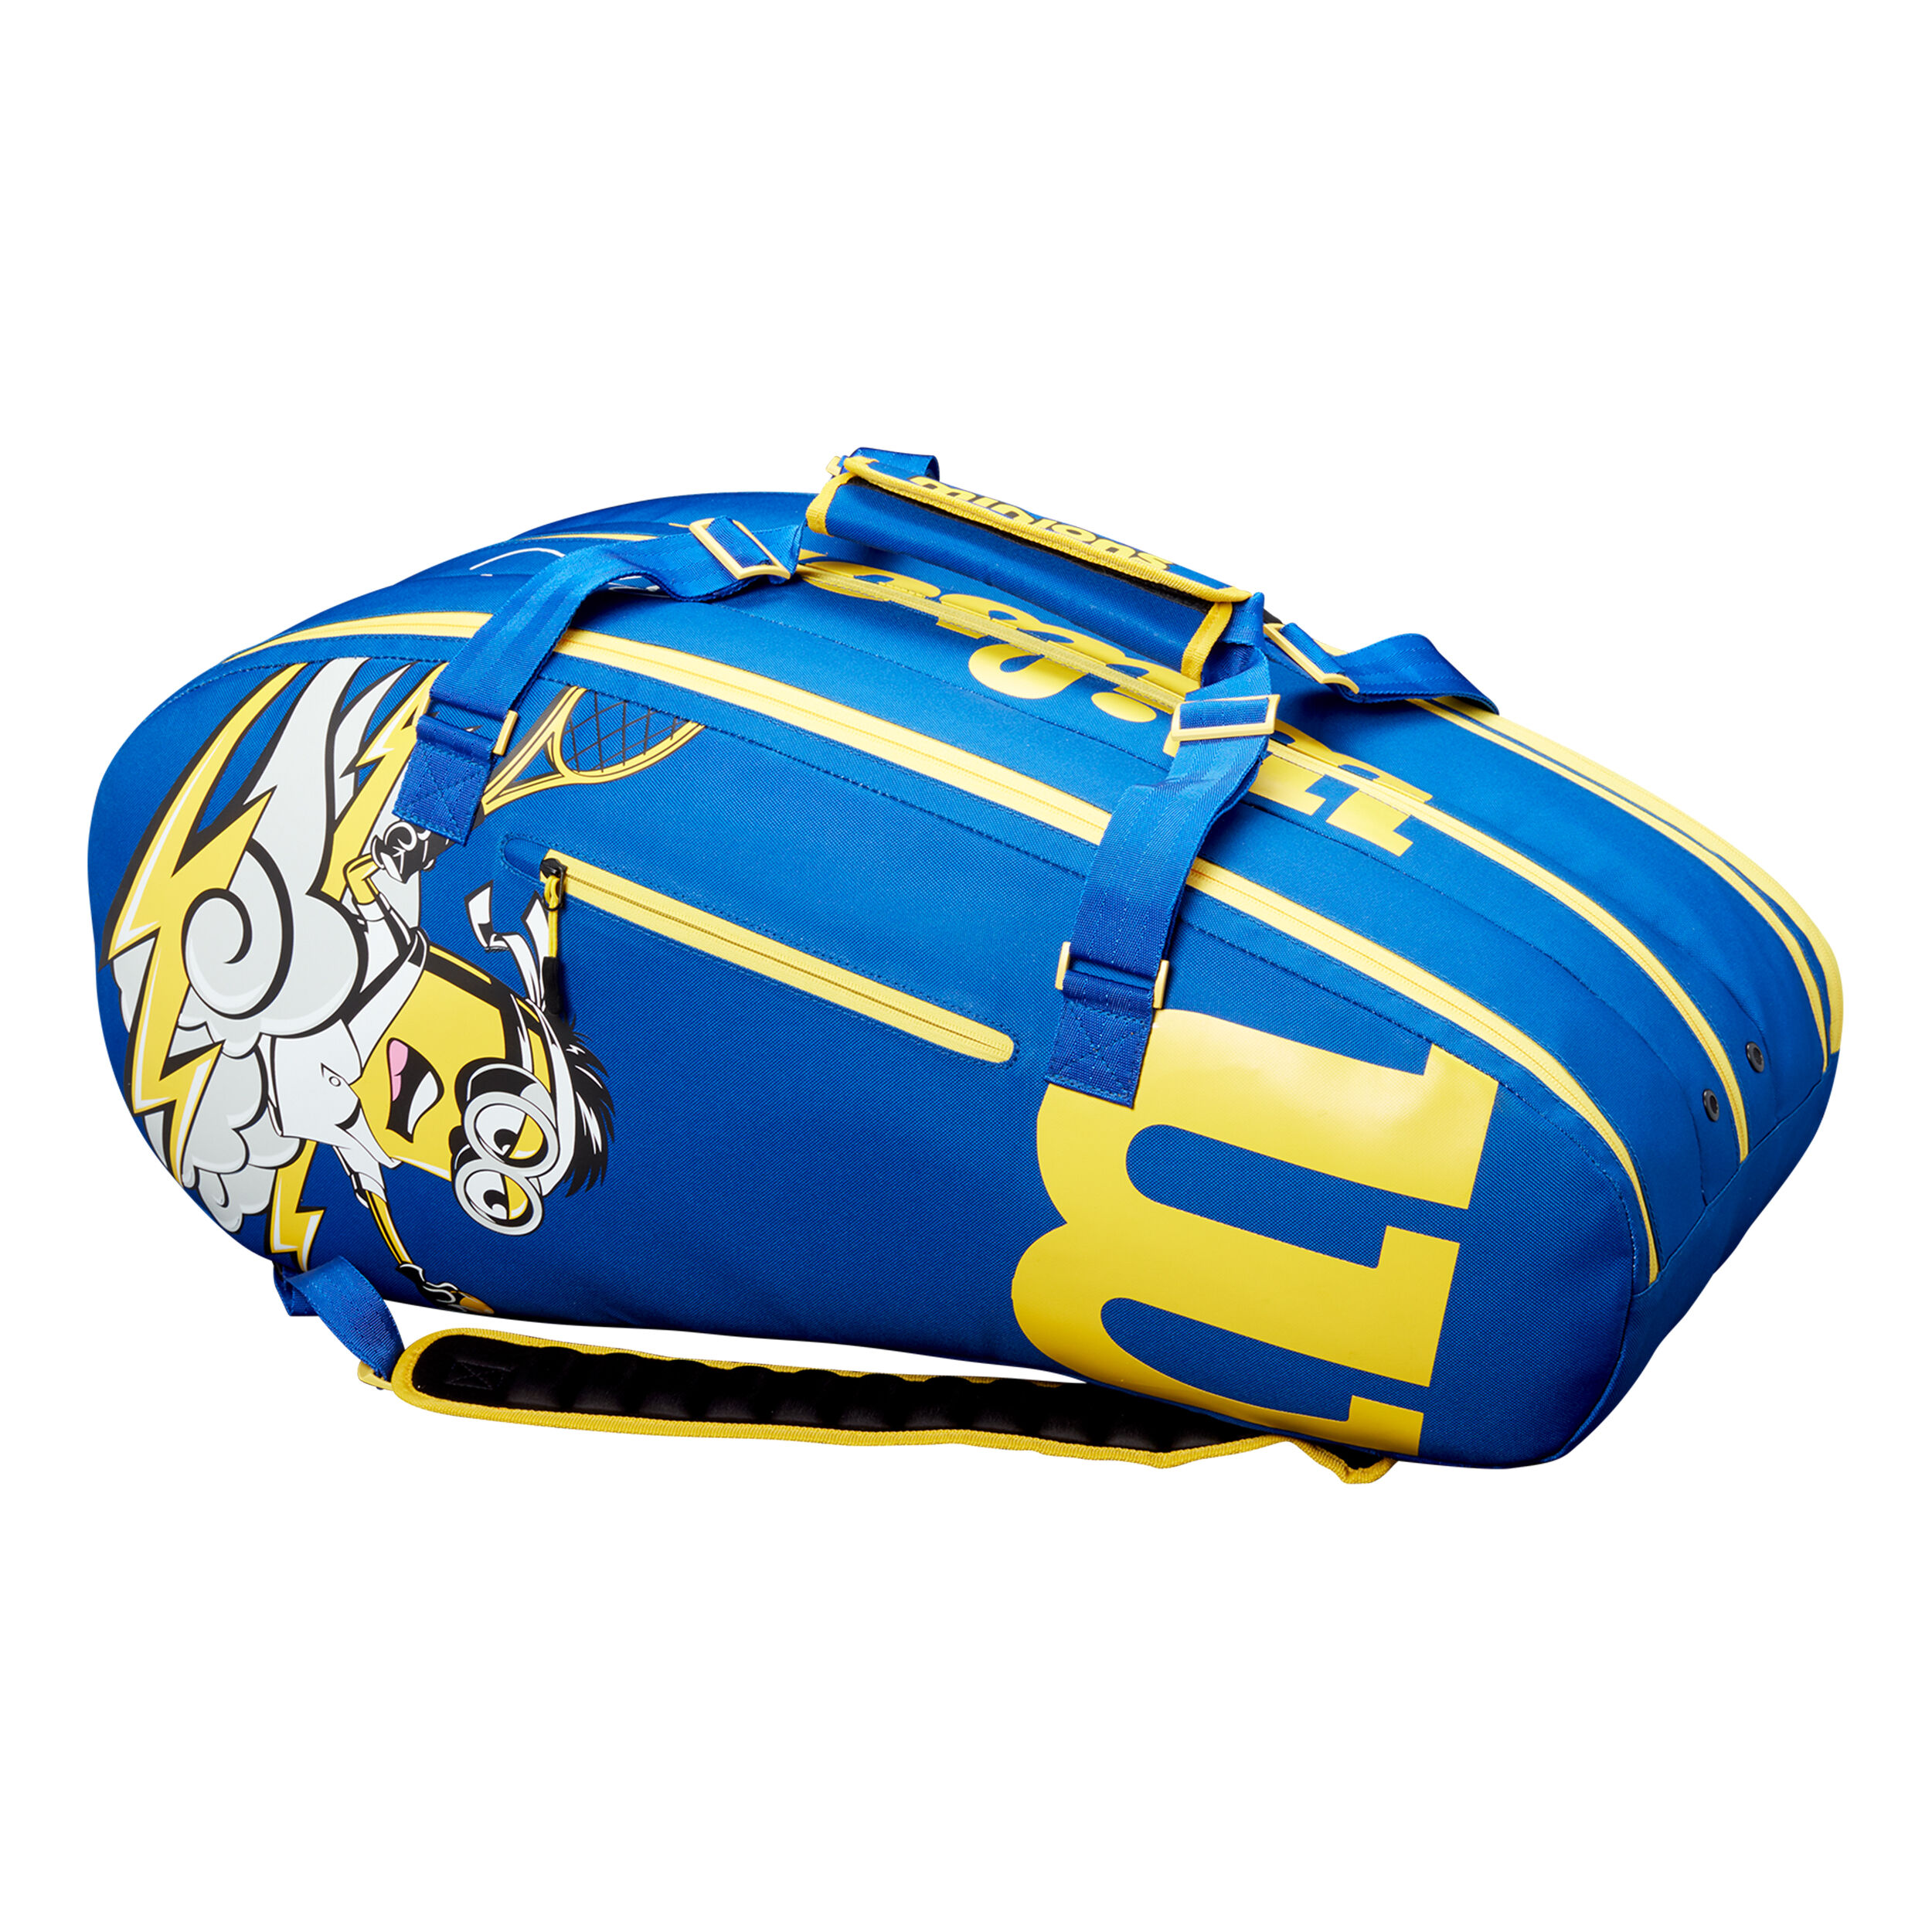 Air Kei Tour Racket Bag 15 Pack - Blue, Yellow